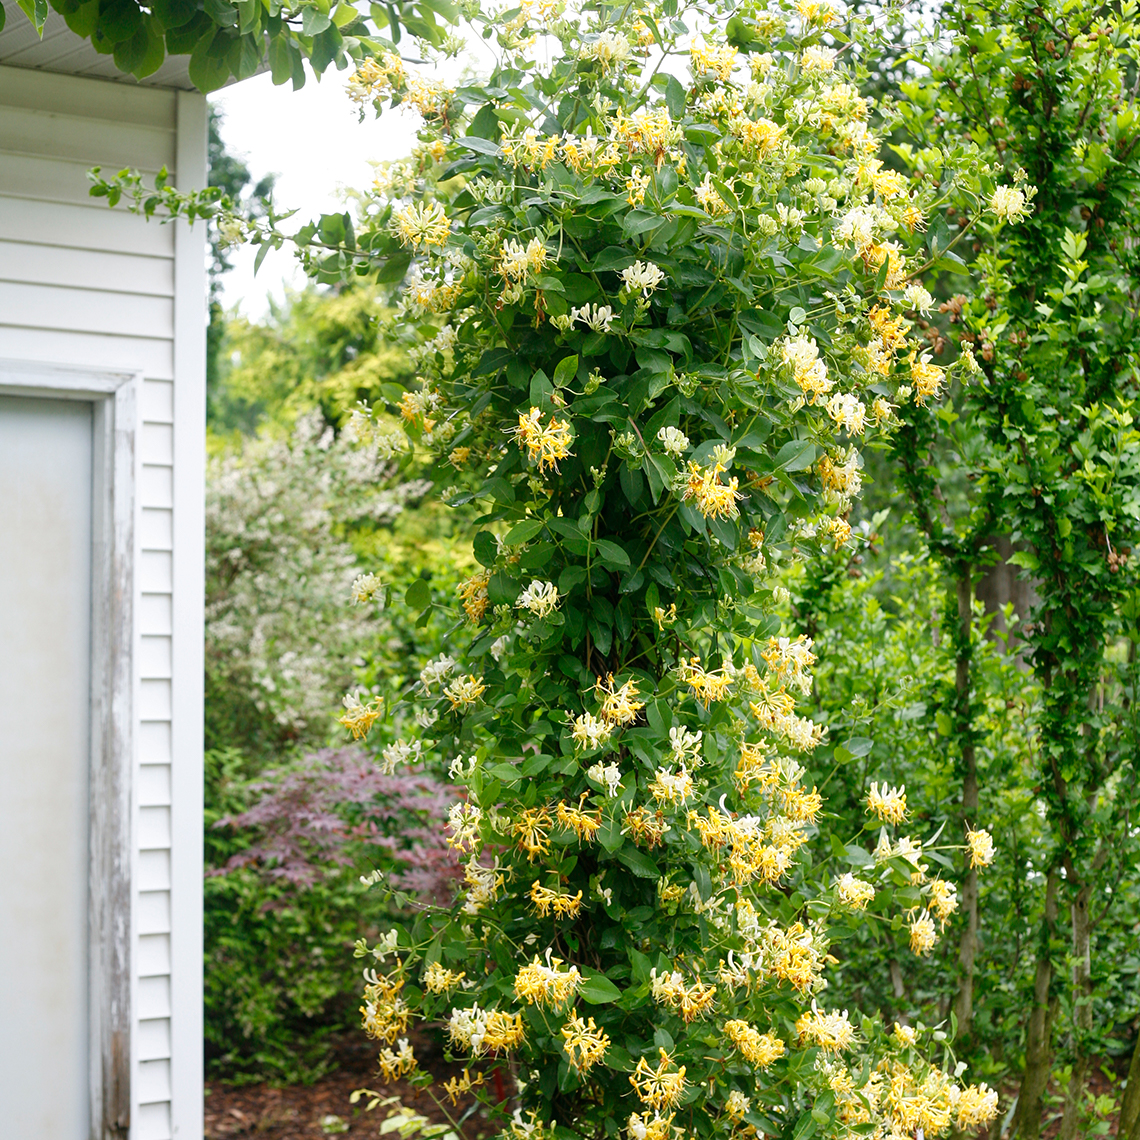 Scentsation Lonicera abundant blooms climbing up pole